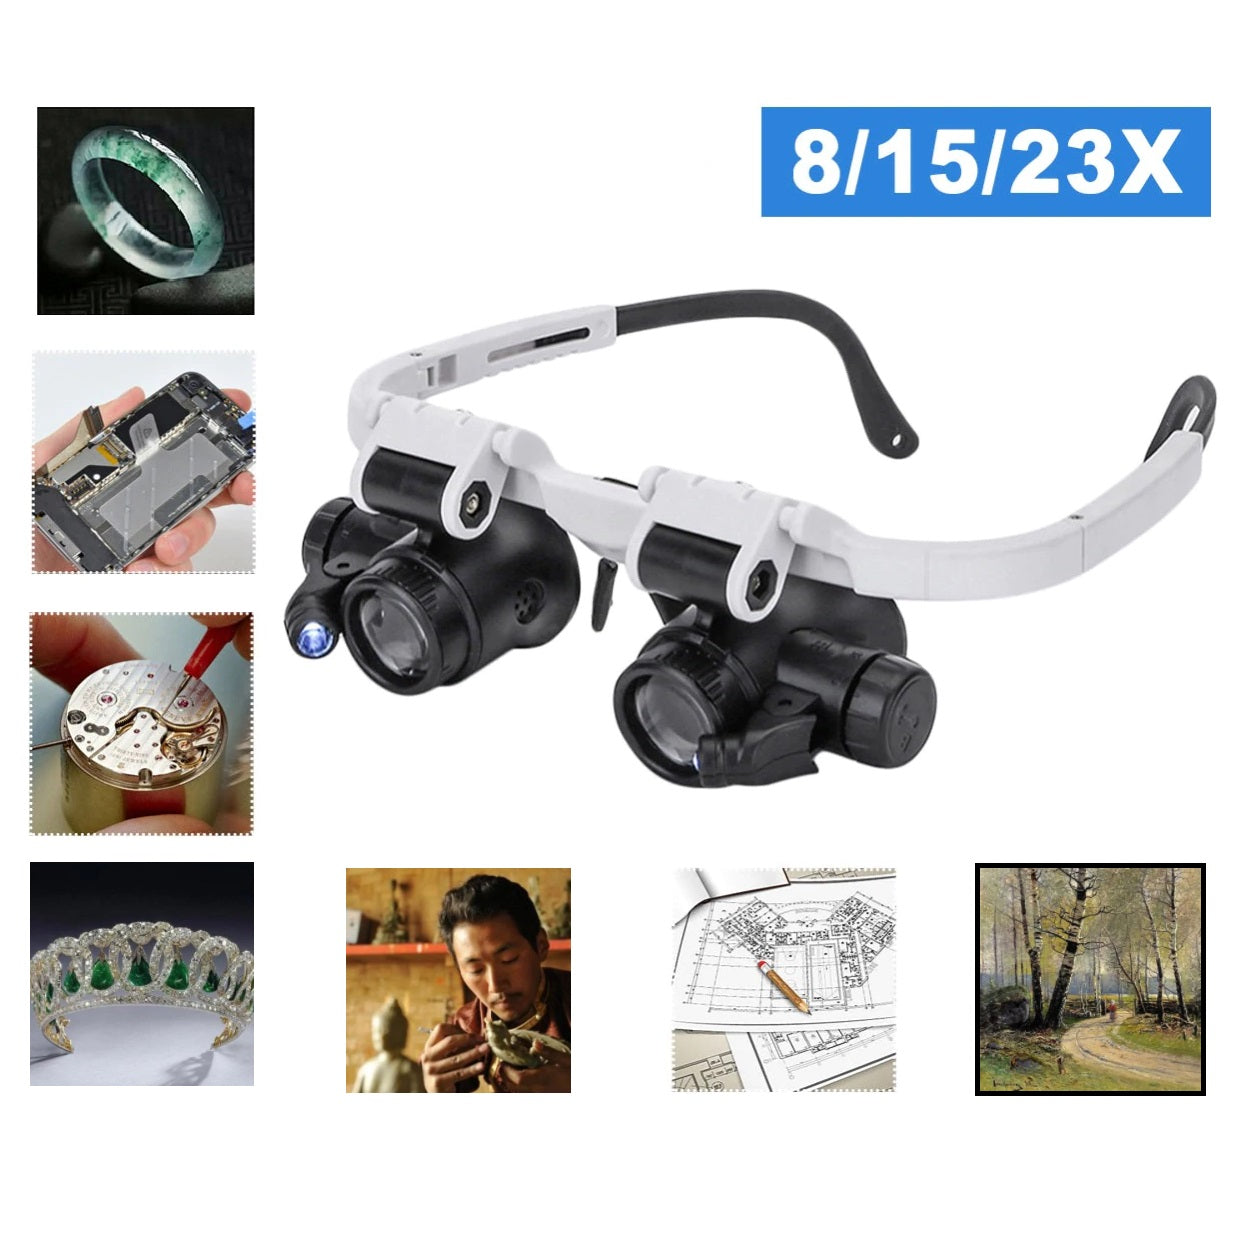 Lupa con Luz 2 Led - RIGHTWELL Gafas Lupa de Aumento para Leer